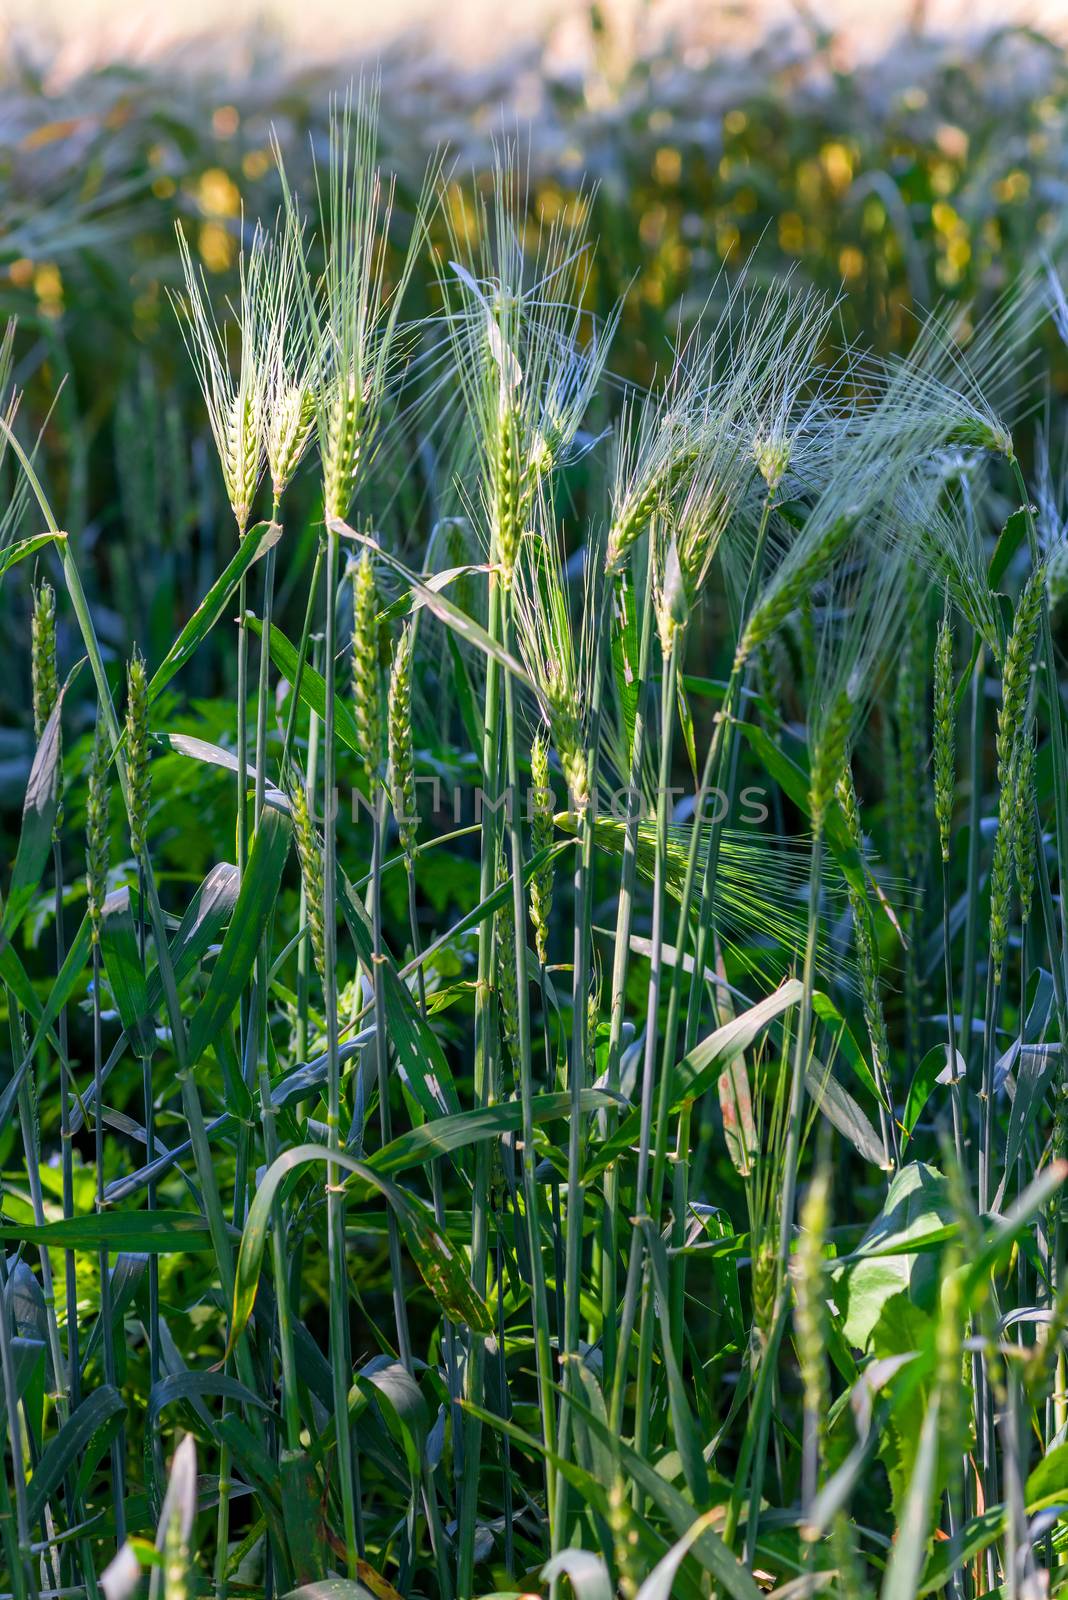 vertical photo of growing ears of juicy wheat in a field